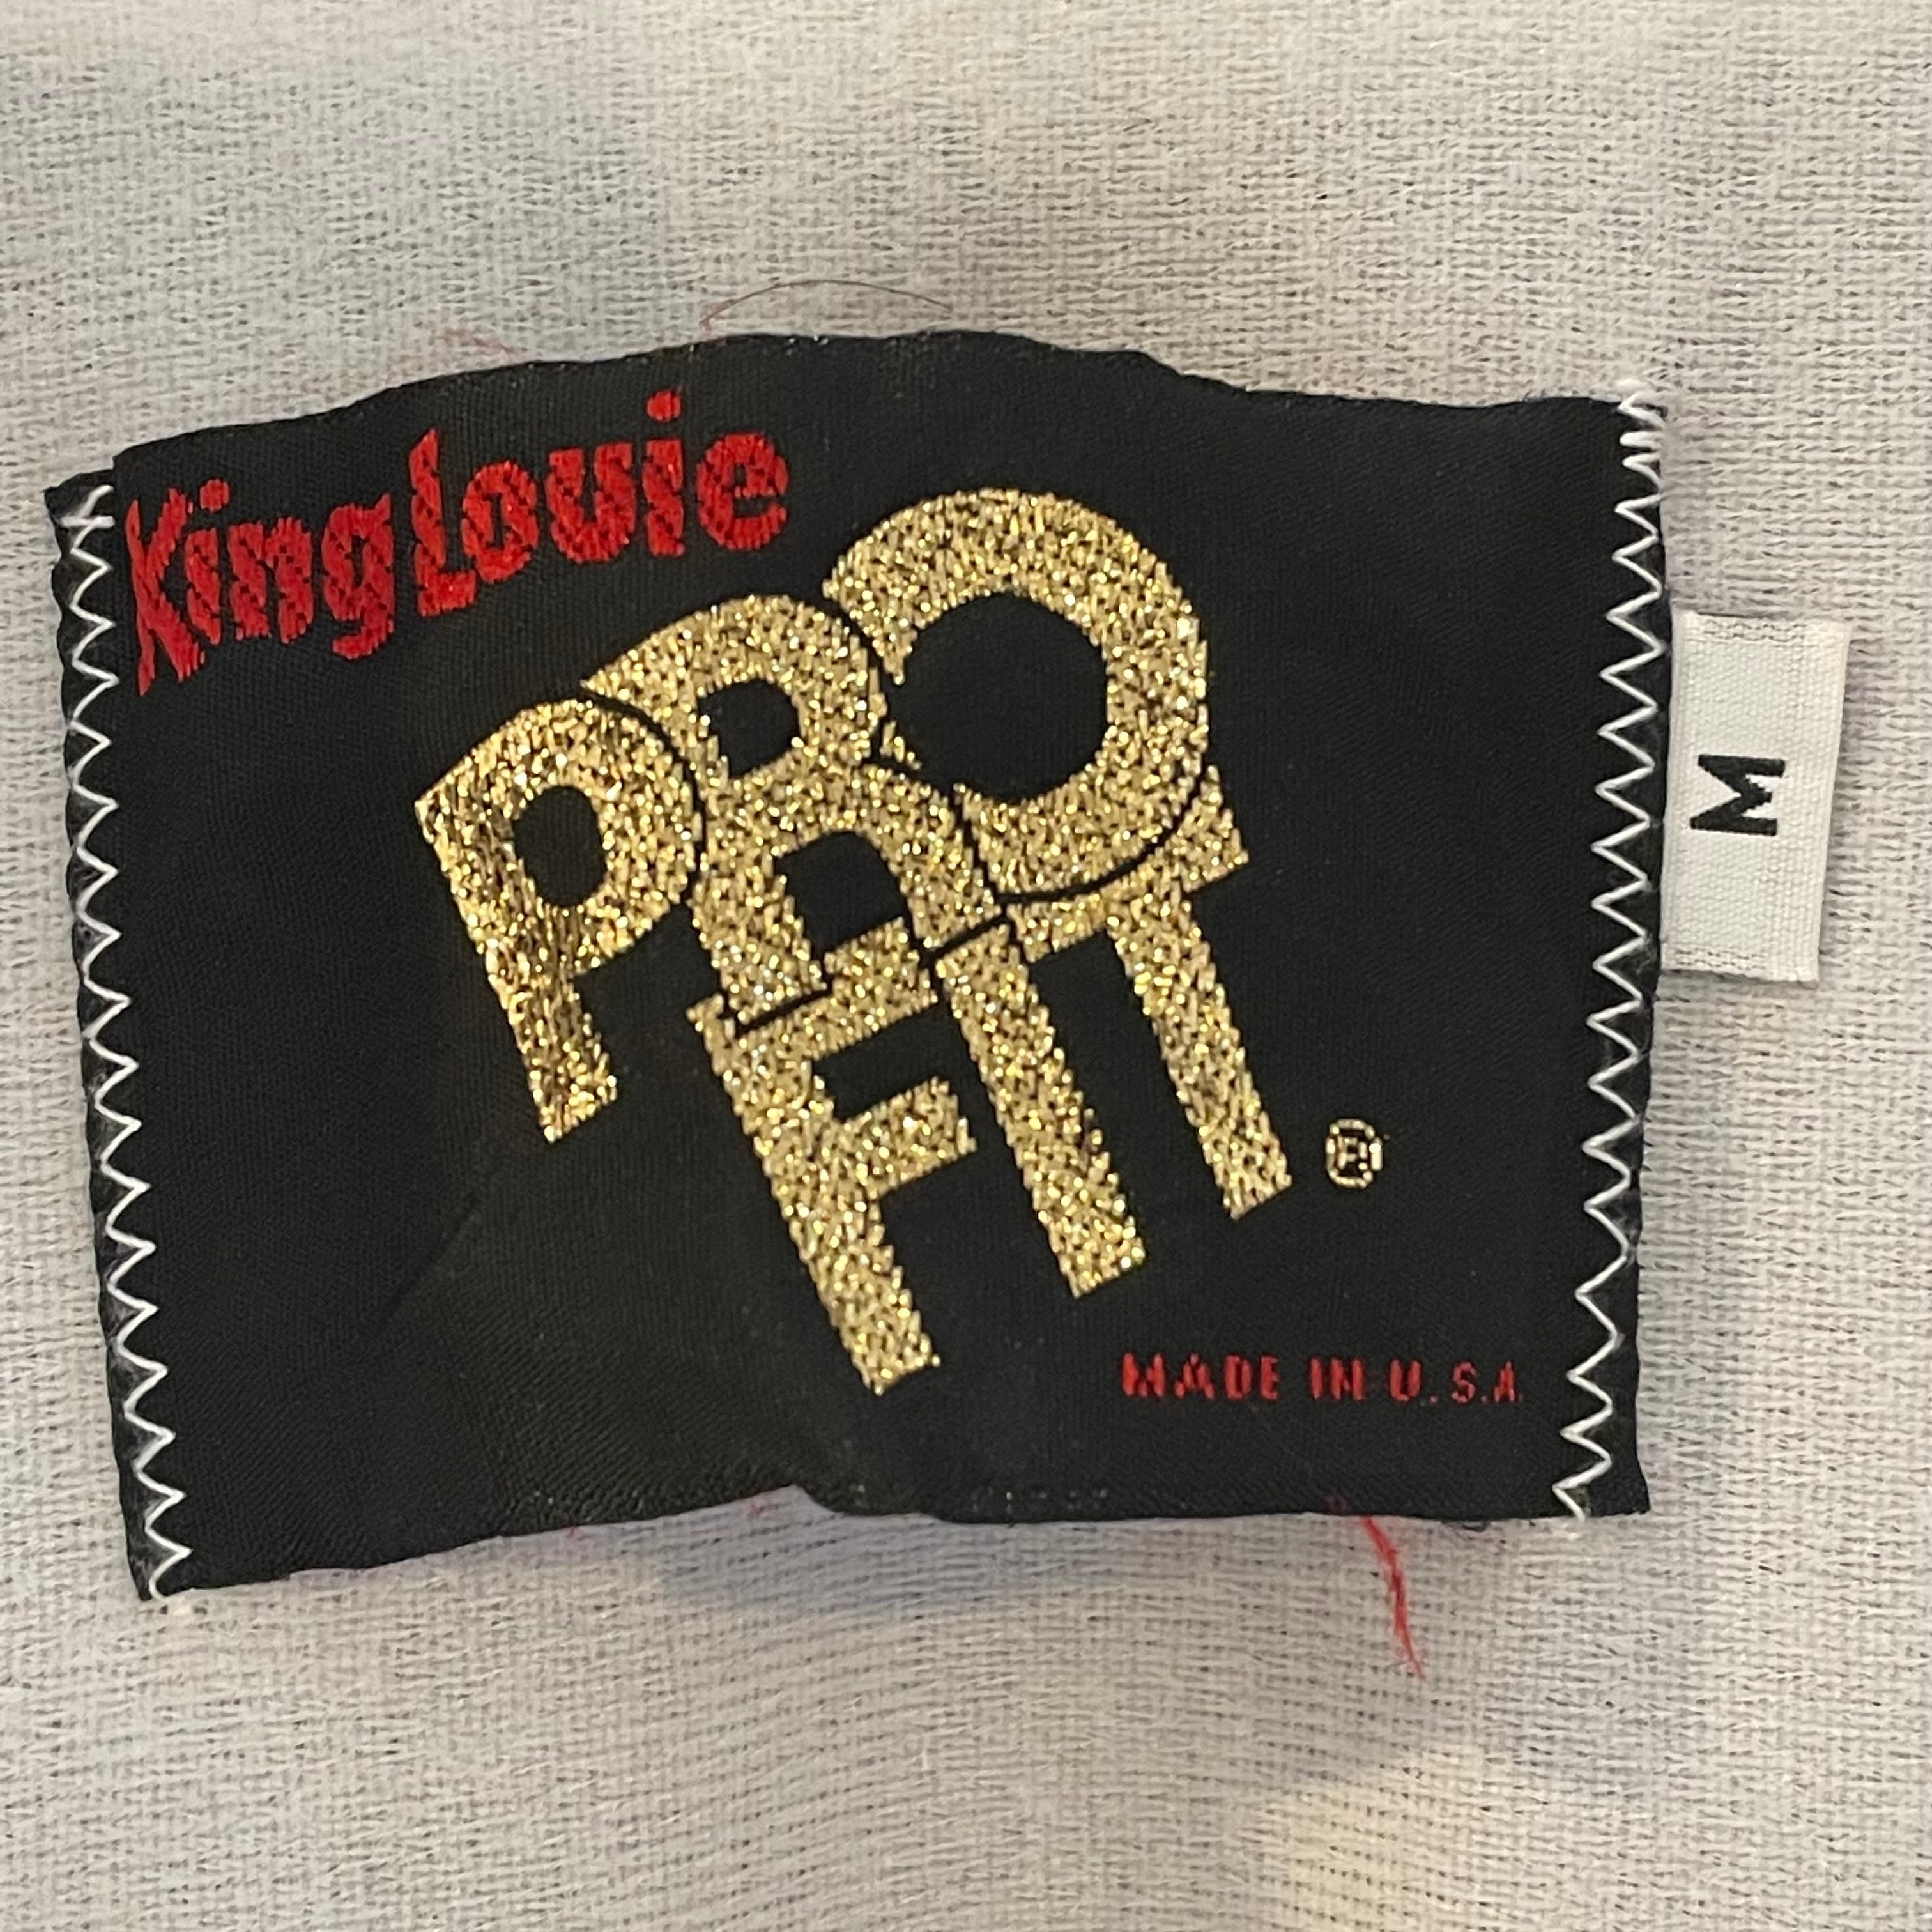 KINGLOUIEs s USA製 ブルゾン ジャケット 企業ロゴ 刺繍ロゴ